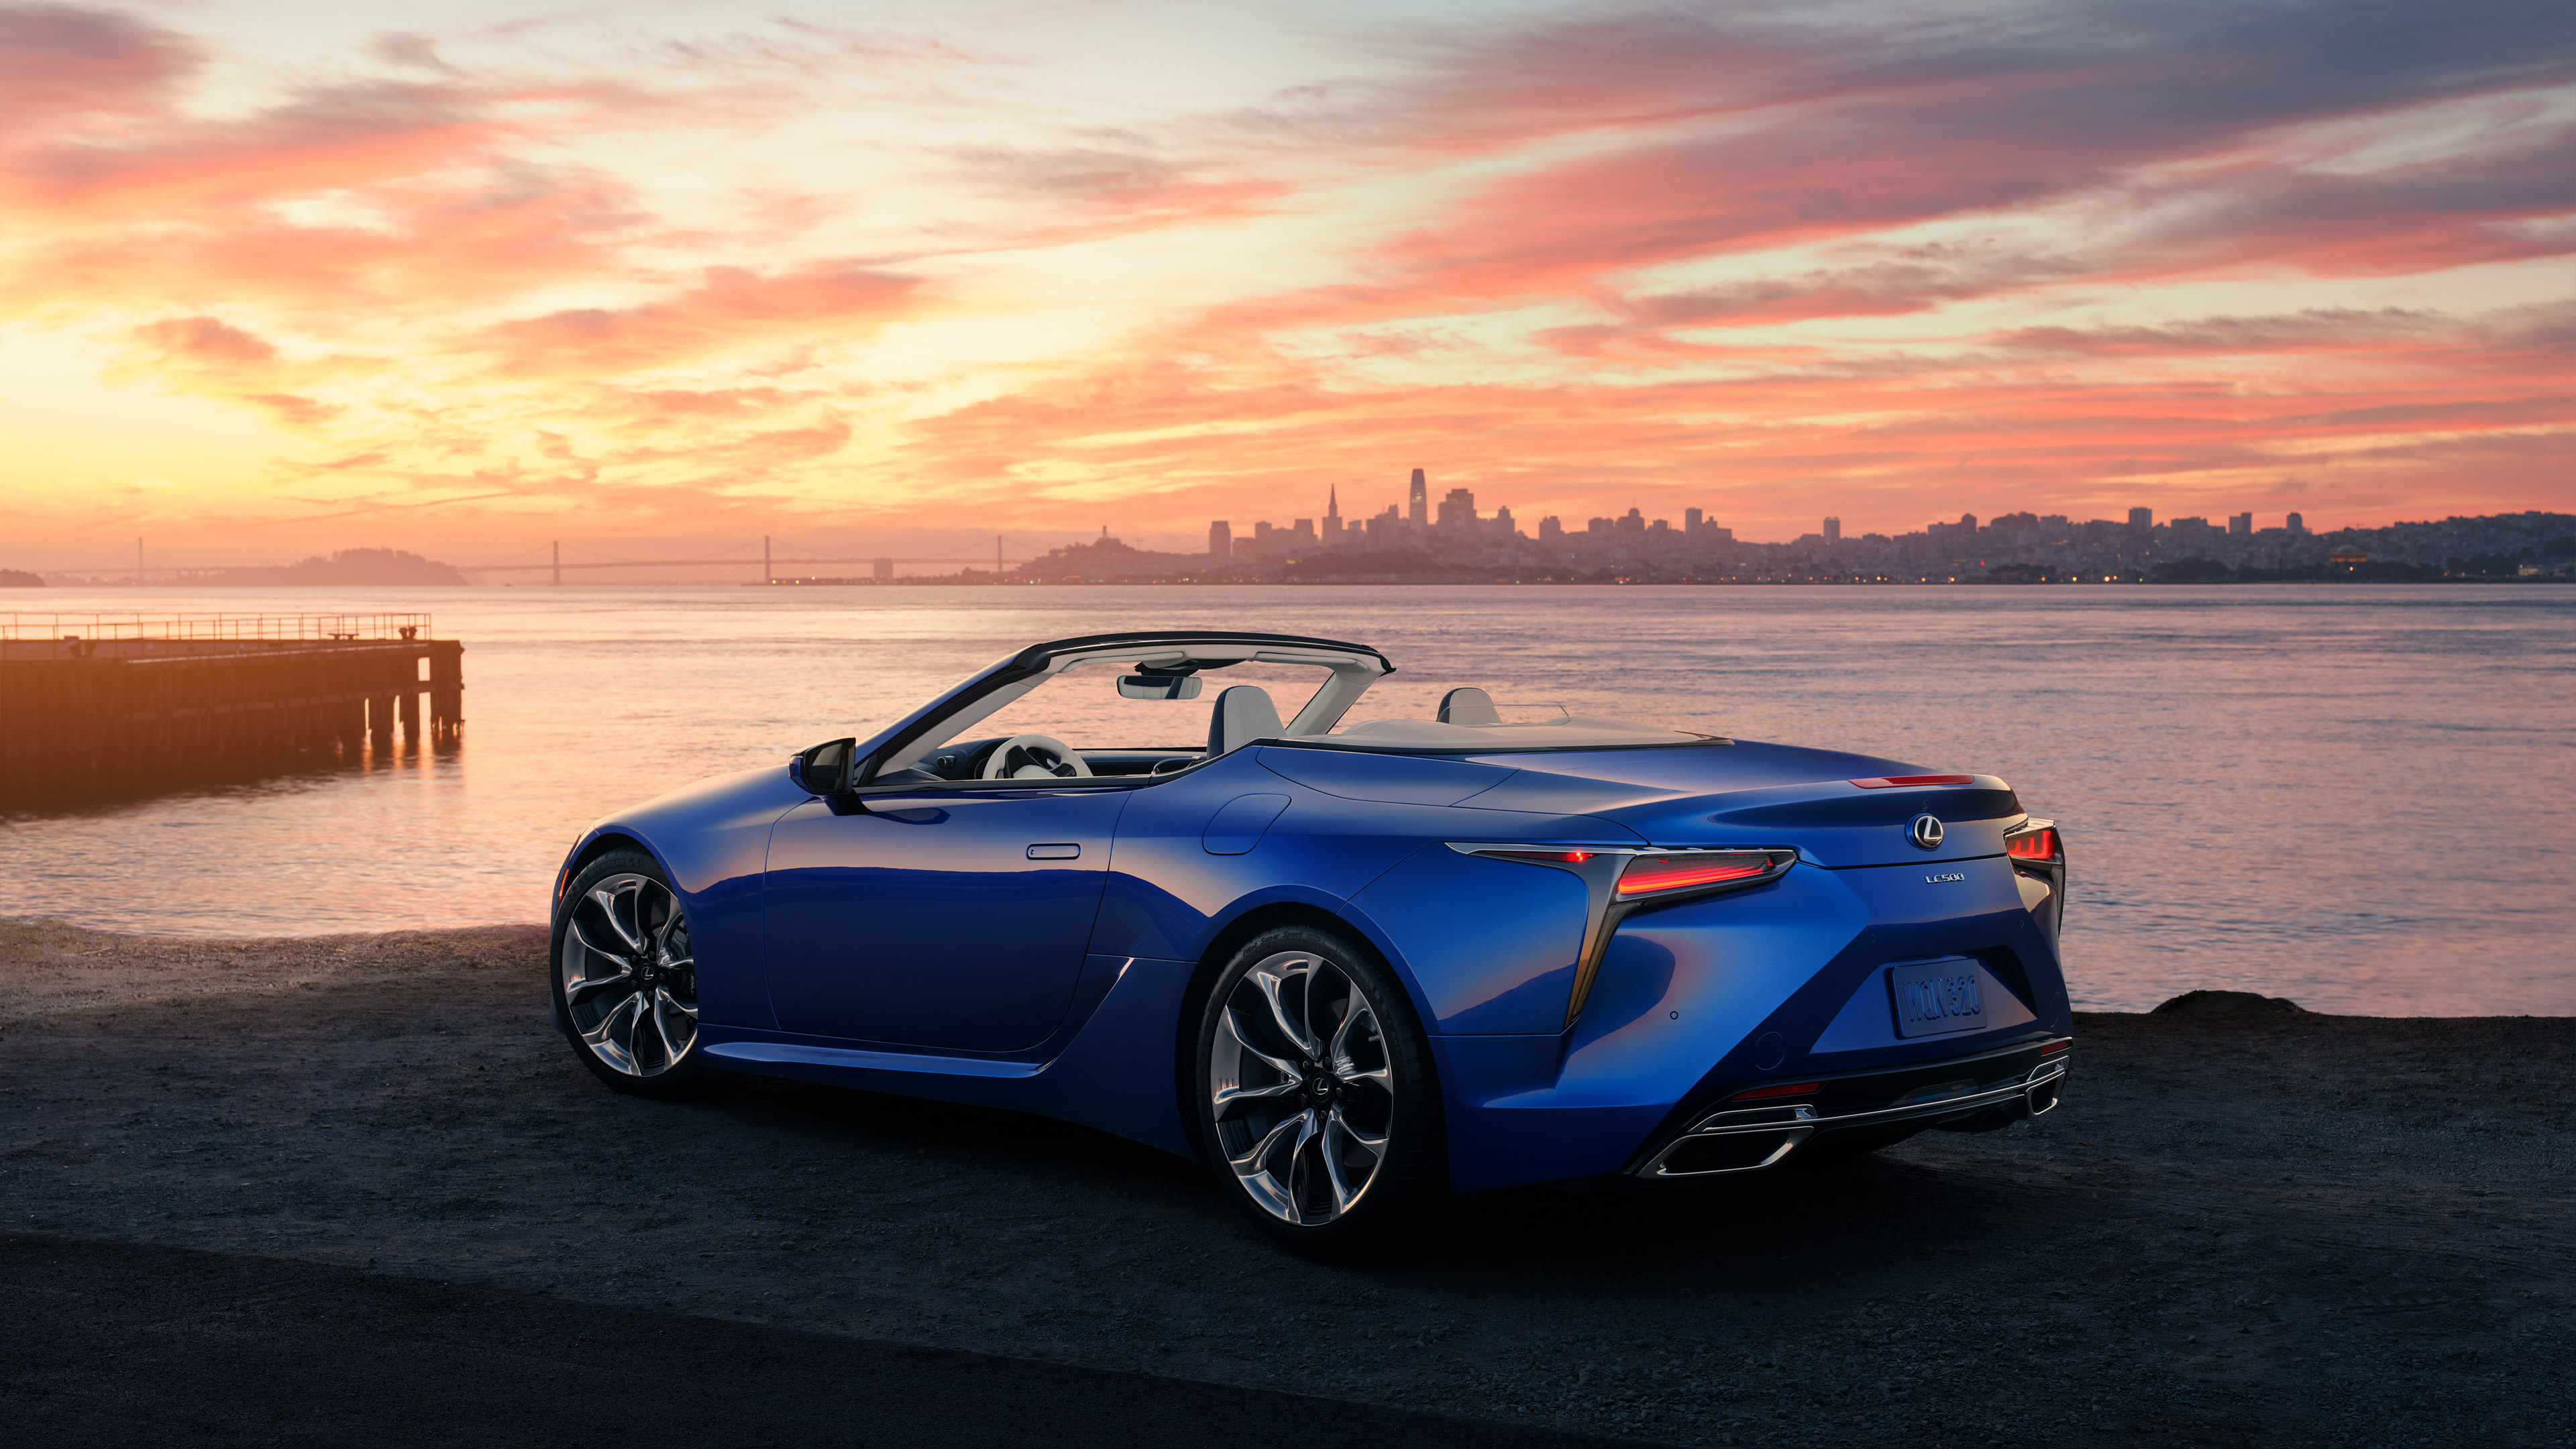 Lexus LC, 500 model, Sunset backdrop, Convertible beauty, 3840x2160 4K Desktop